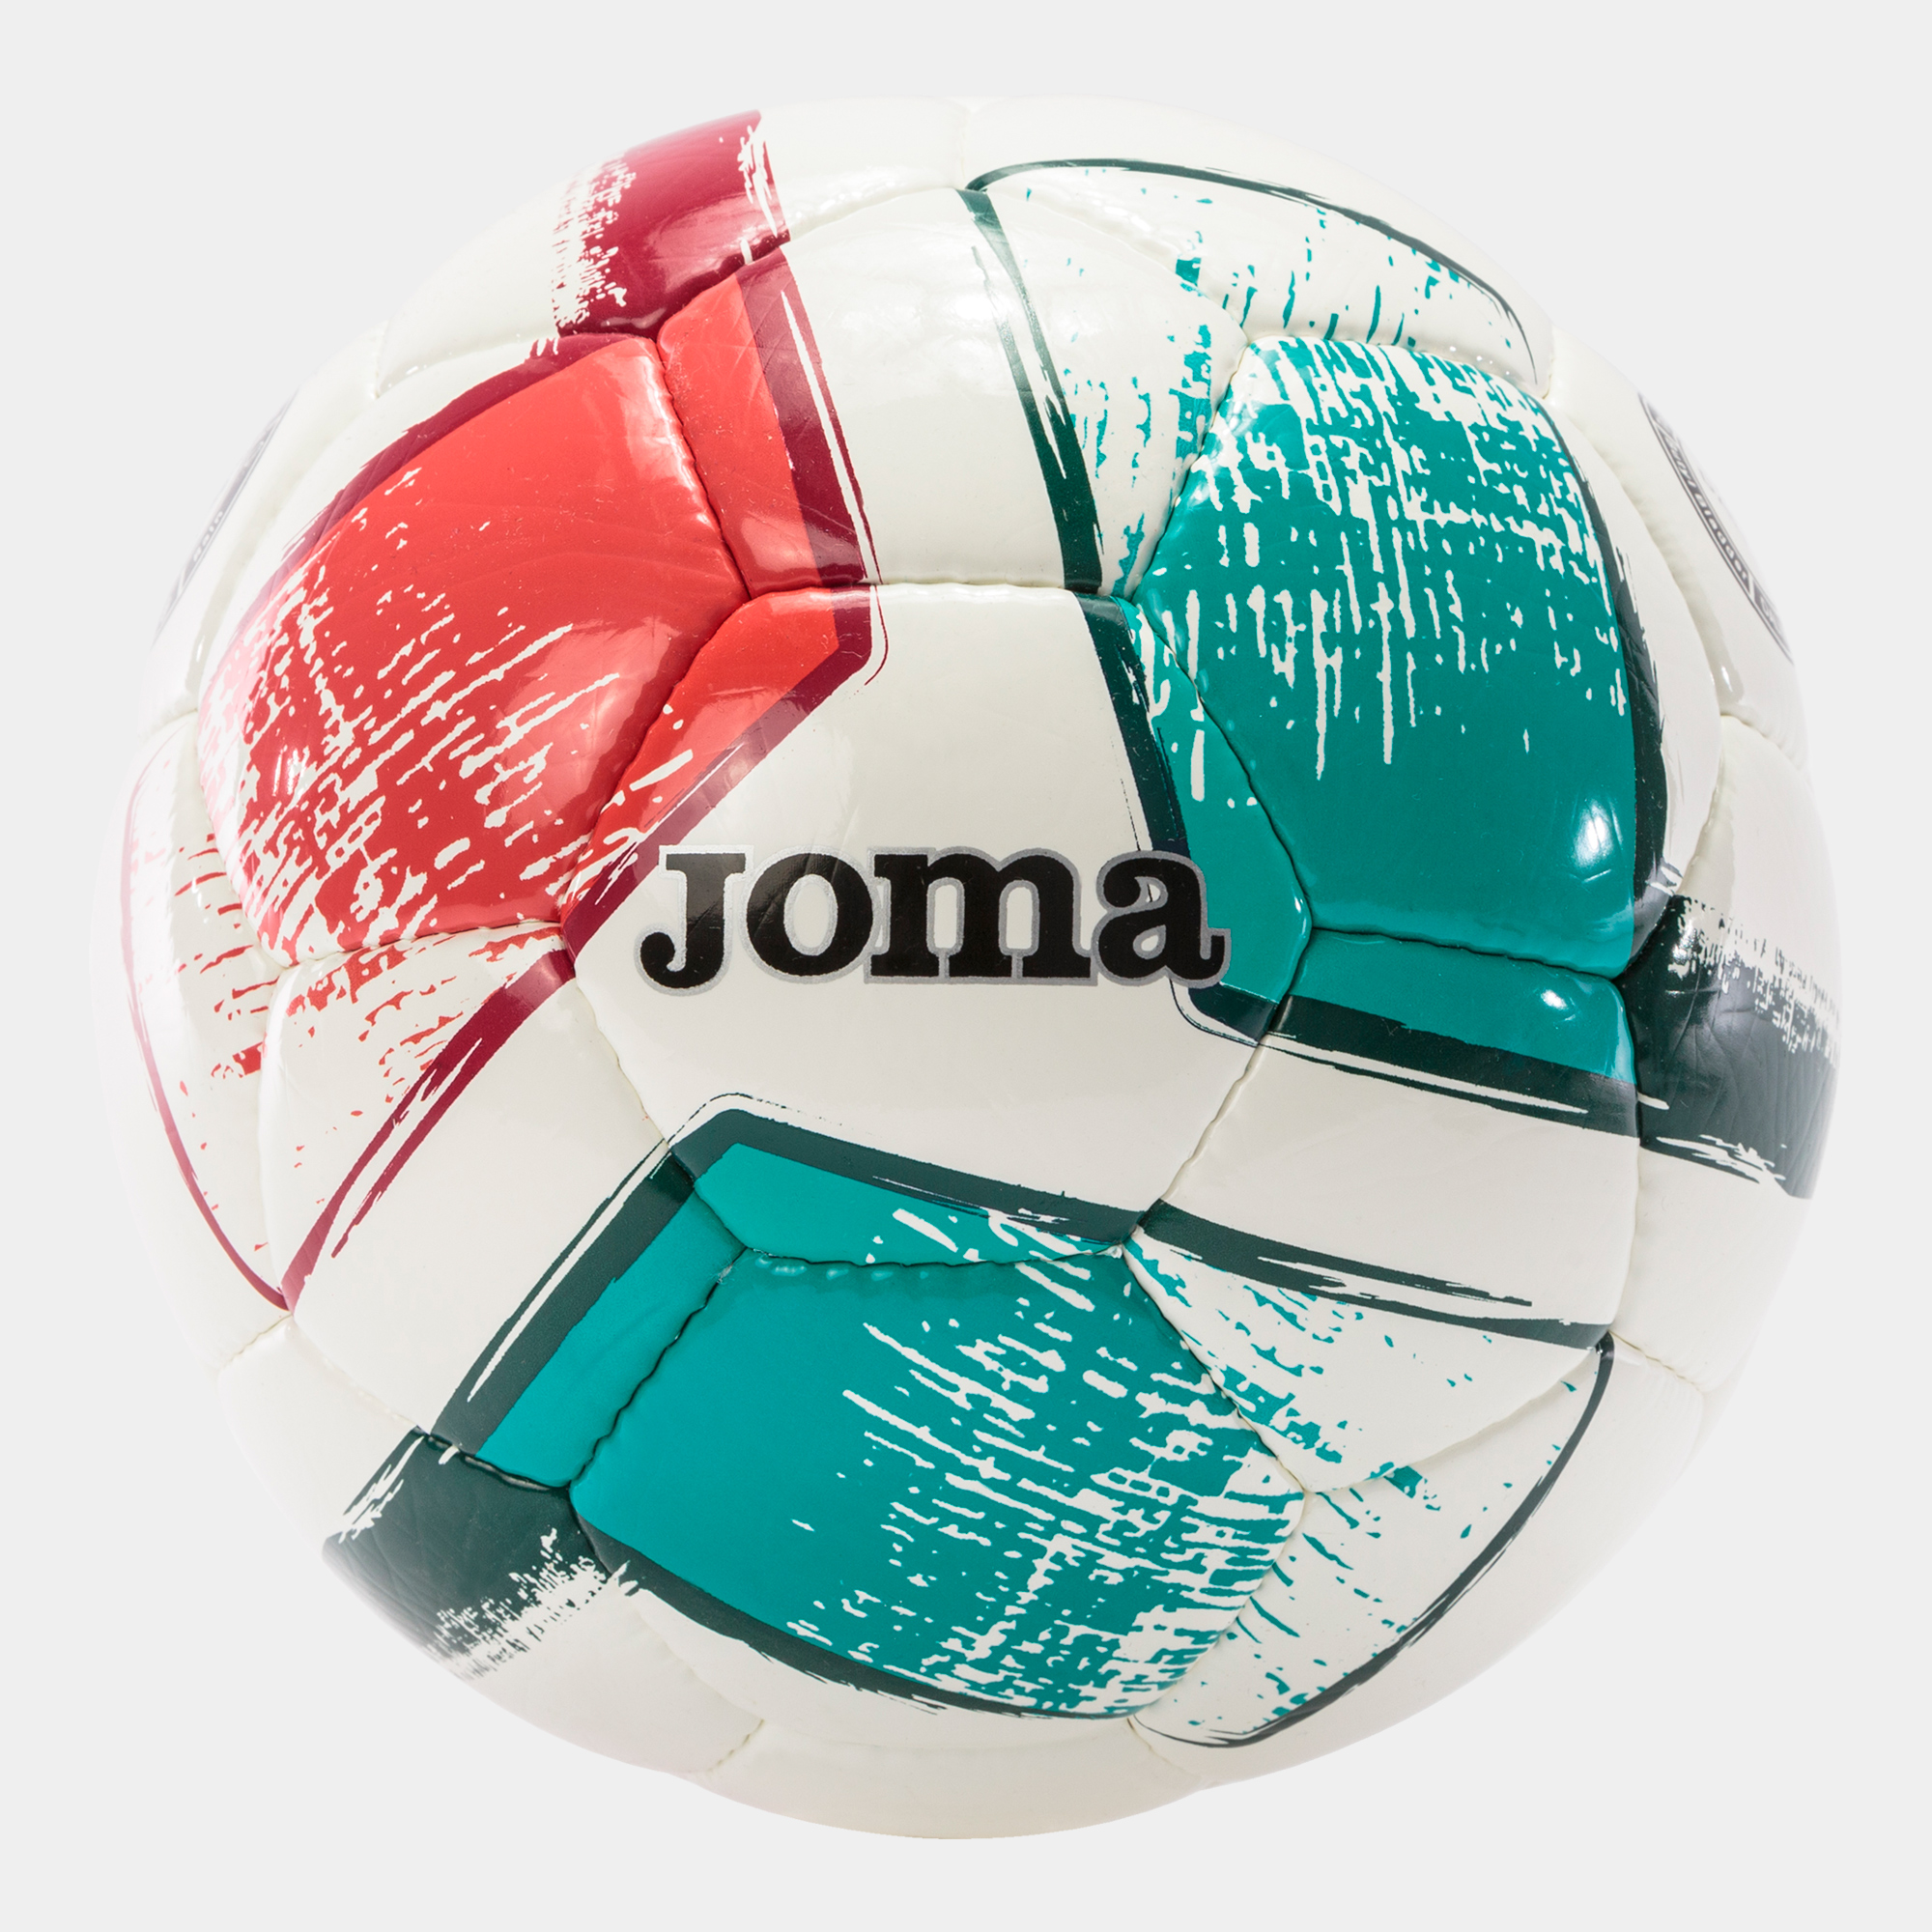 фото Joma DALI II мяч футбольный 400649.497 размер 4 Football-54 